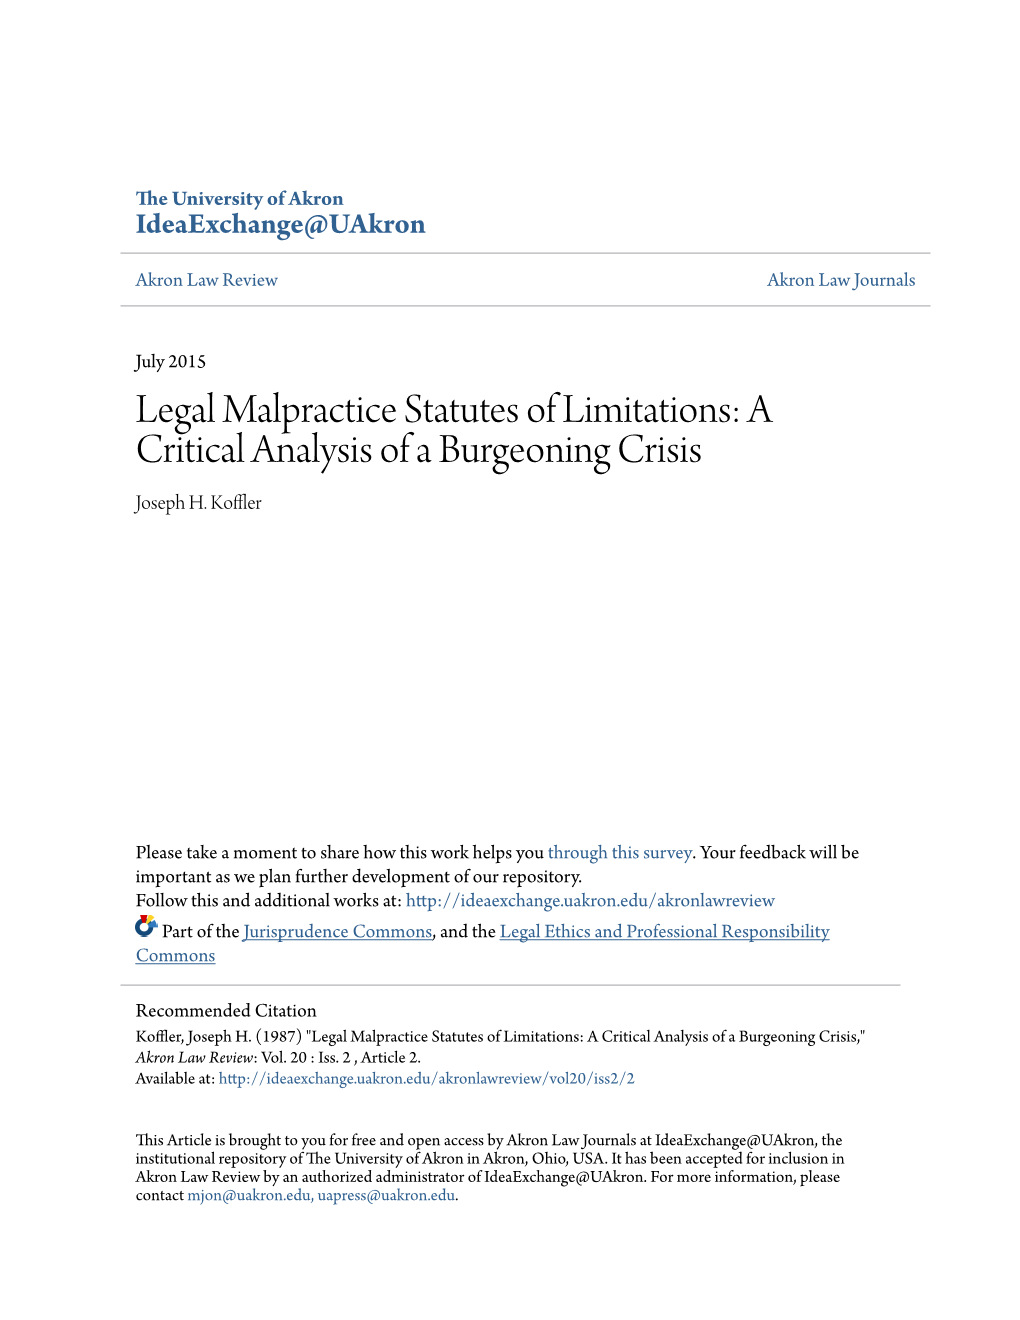 Legal Malpractice Statutes of Limitations: a Critical Analysis of a Burgeoning Crisis Joseph H